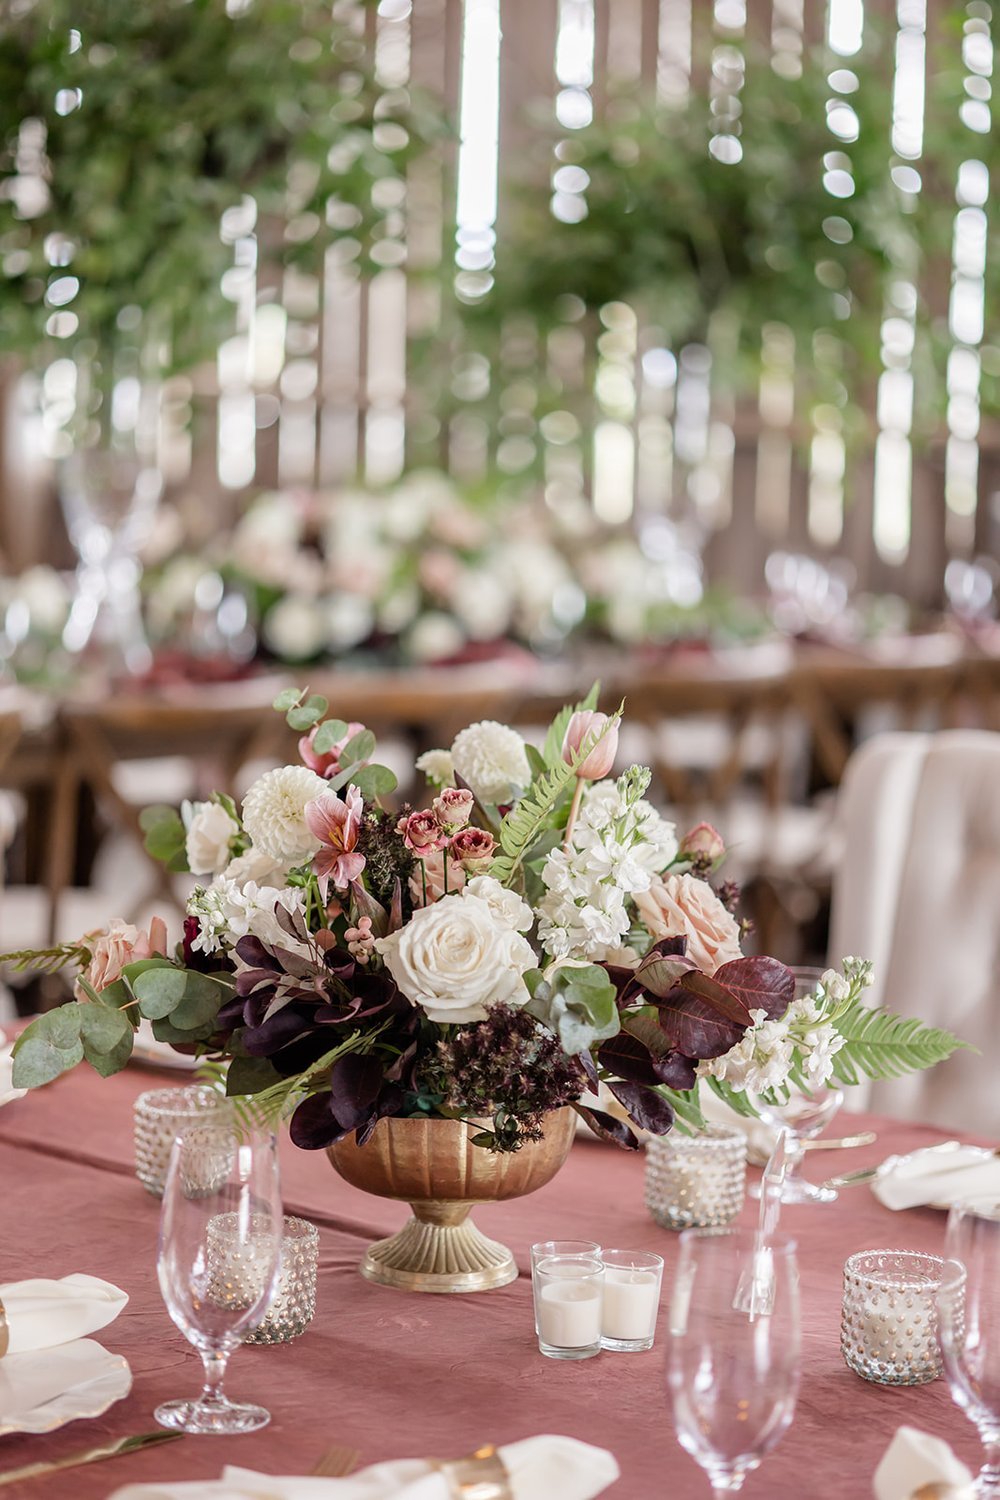  Louisville wedding flowers table centerpiece 